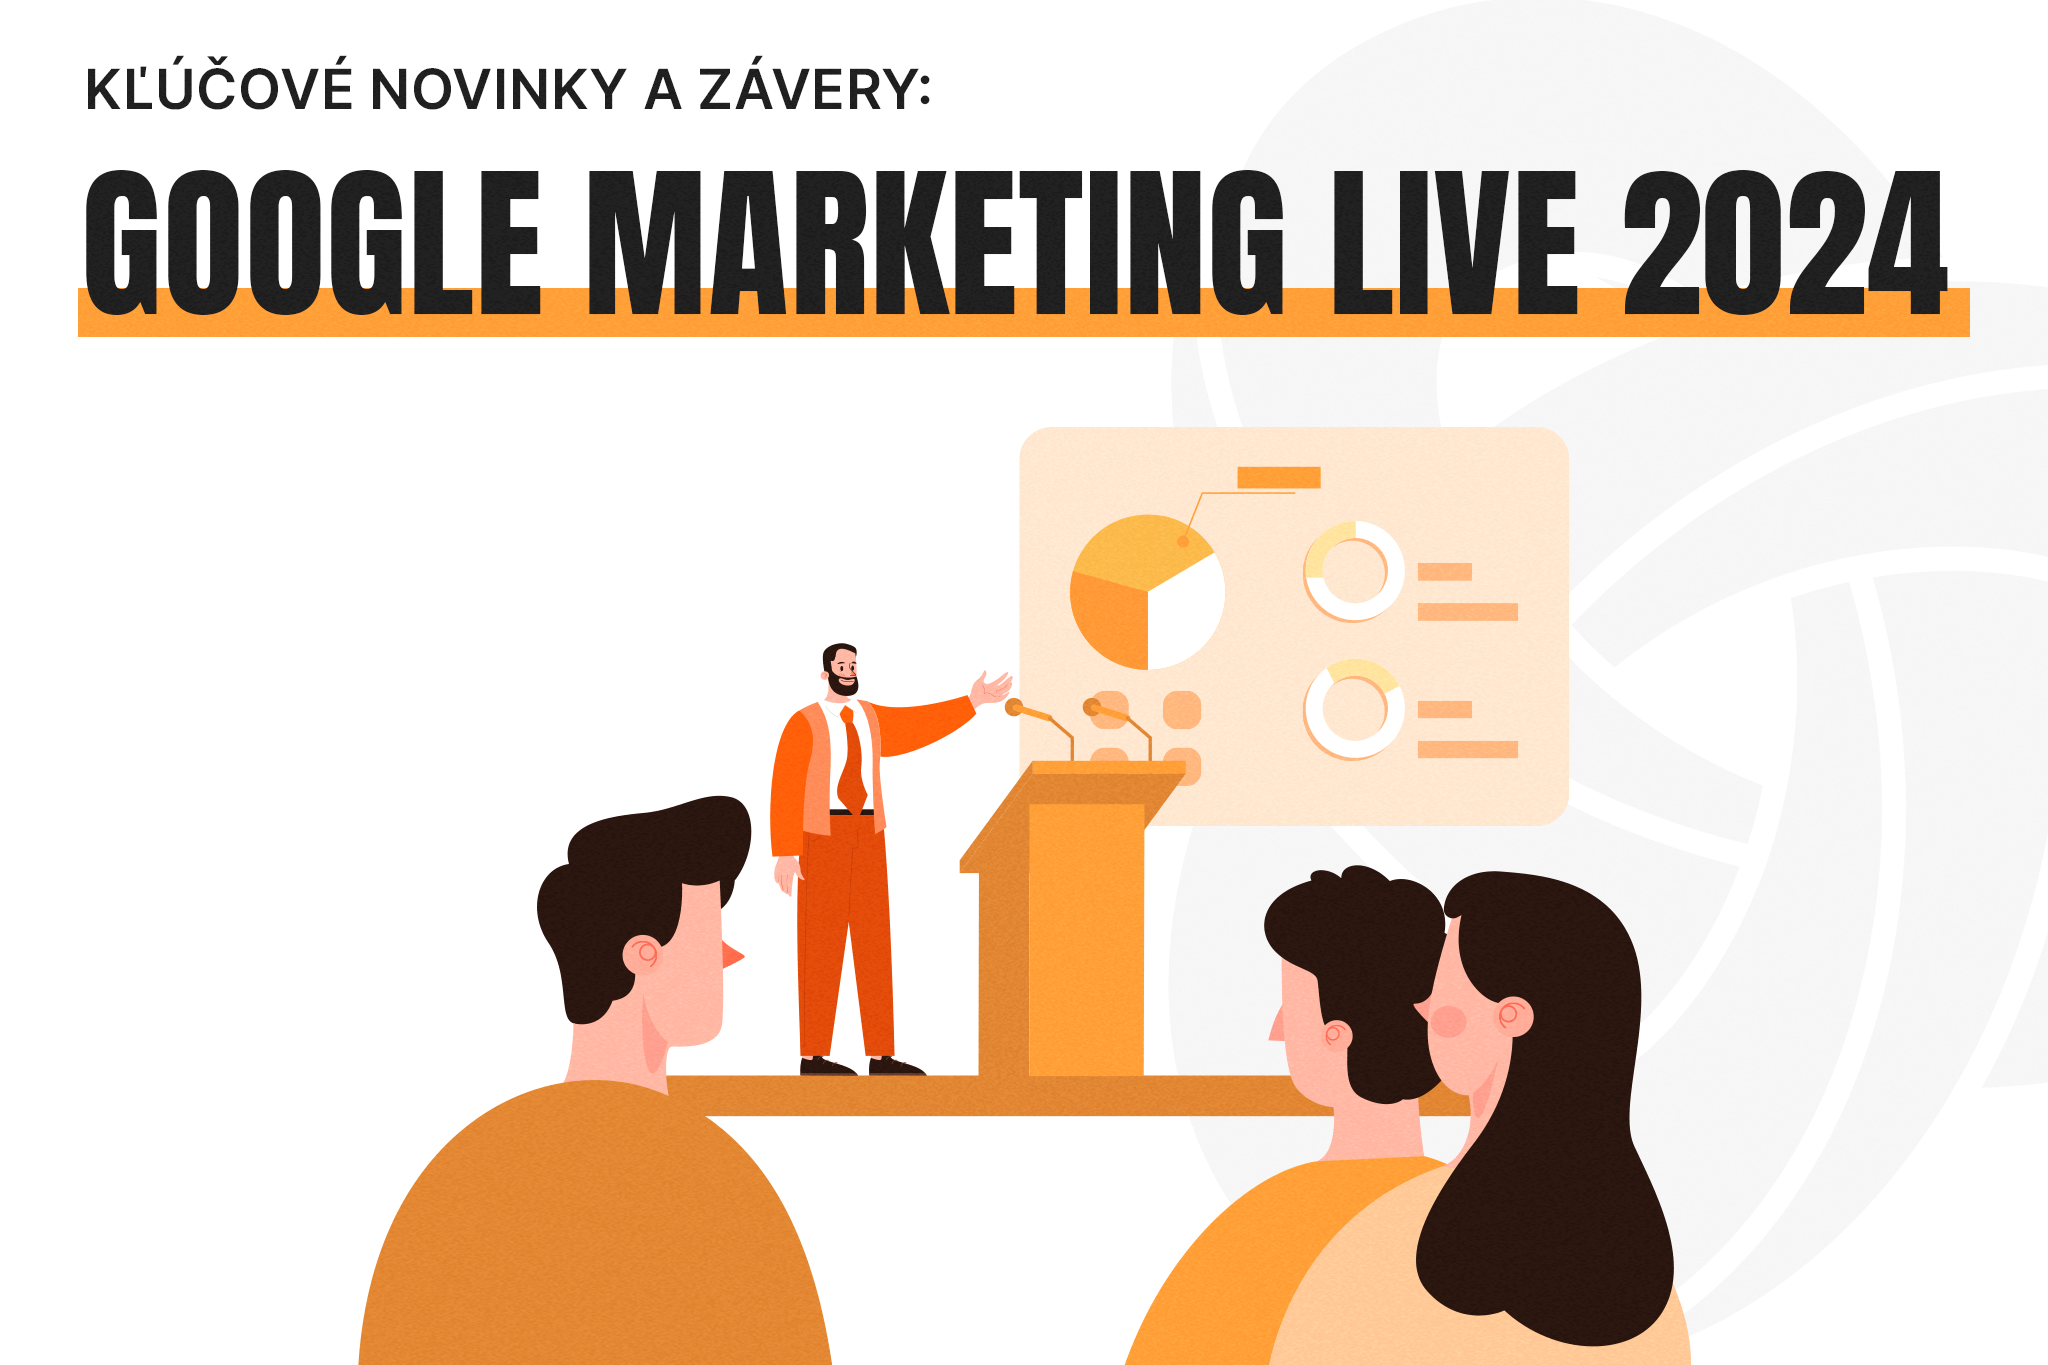 Google Marketing Live 2024: Kľúčové novinky a závery